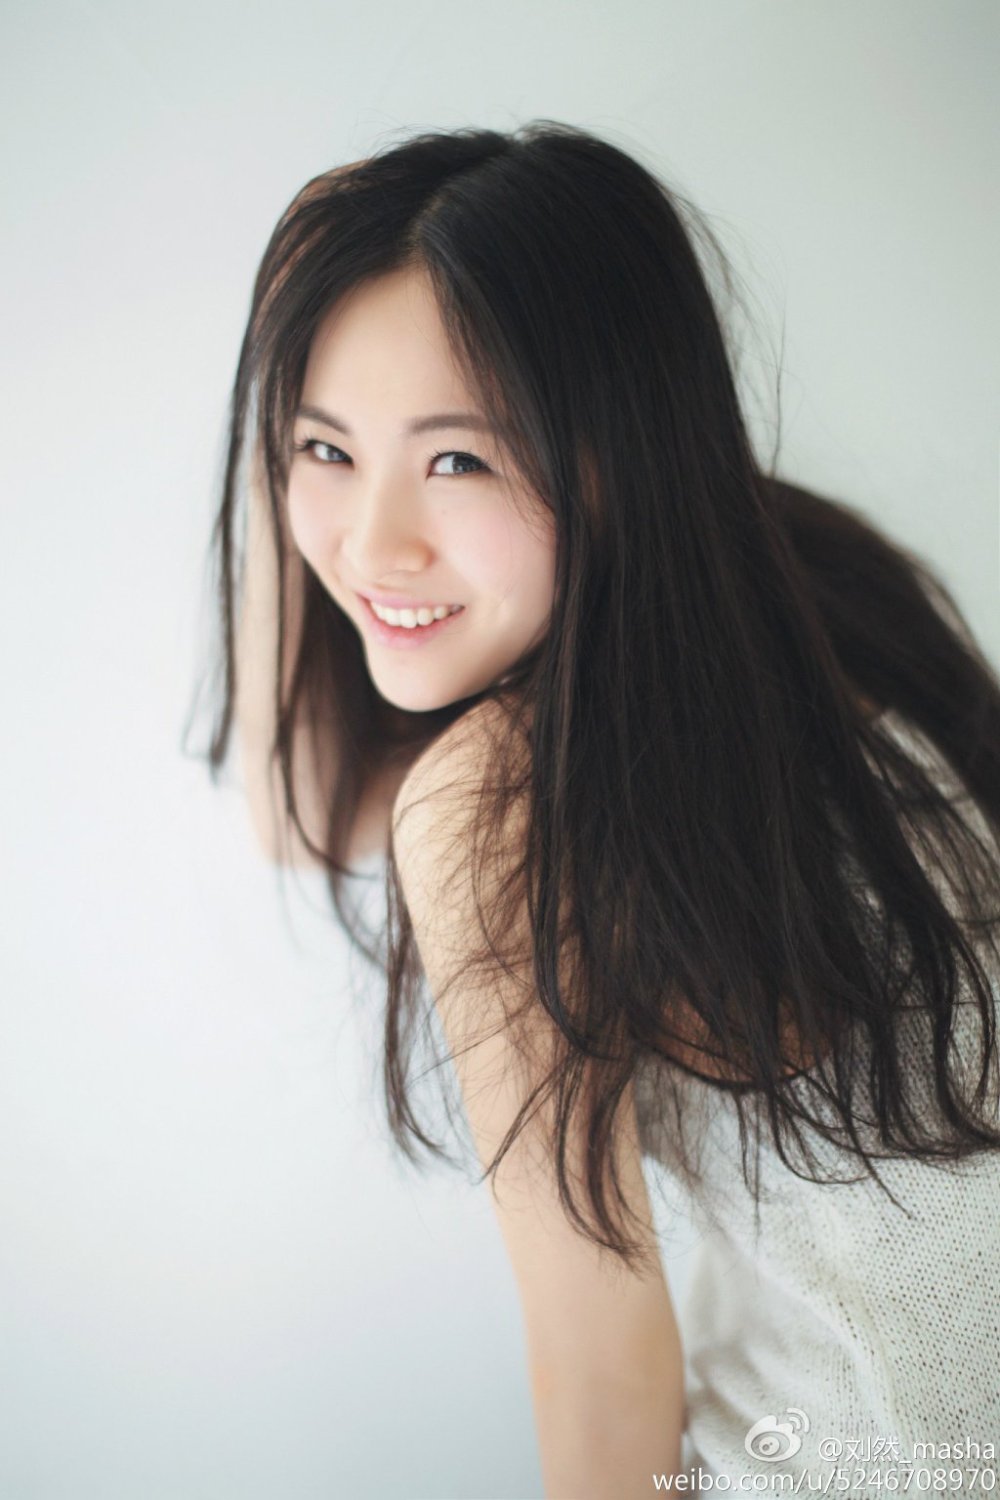 Ran Liu Sexy and Hottest Photos , Latest Pics